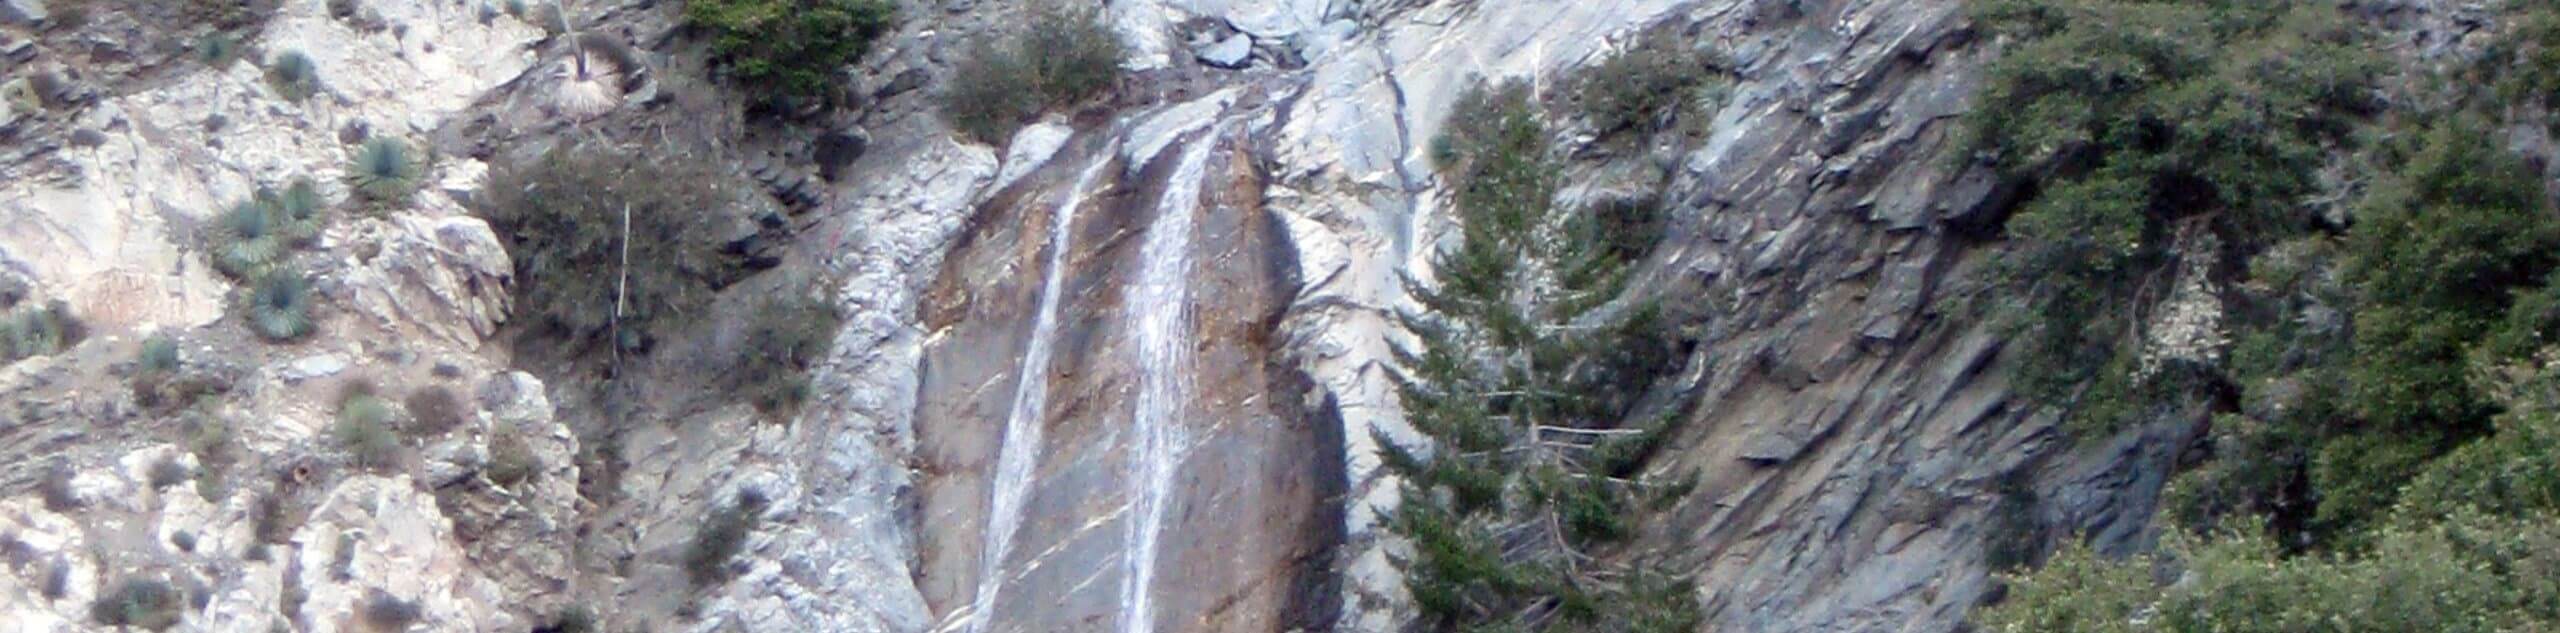 San Antonio Falls Trail